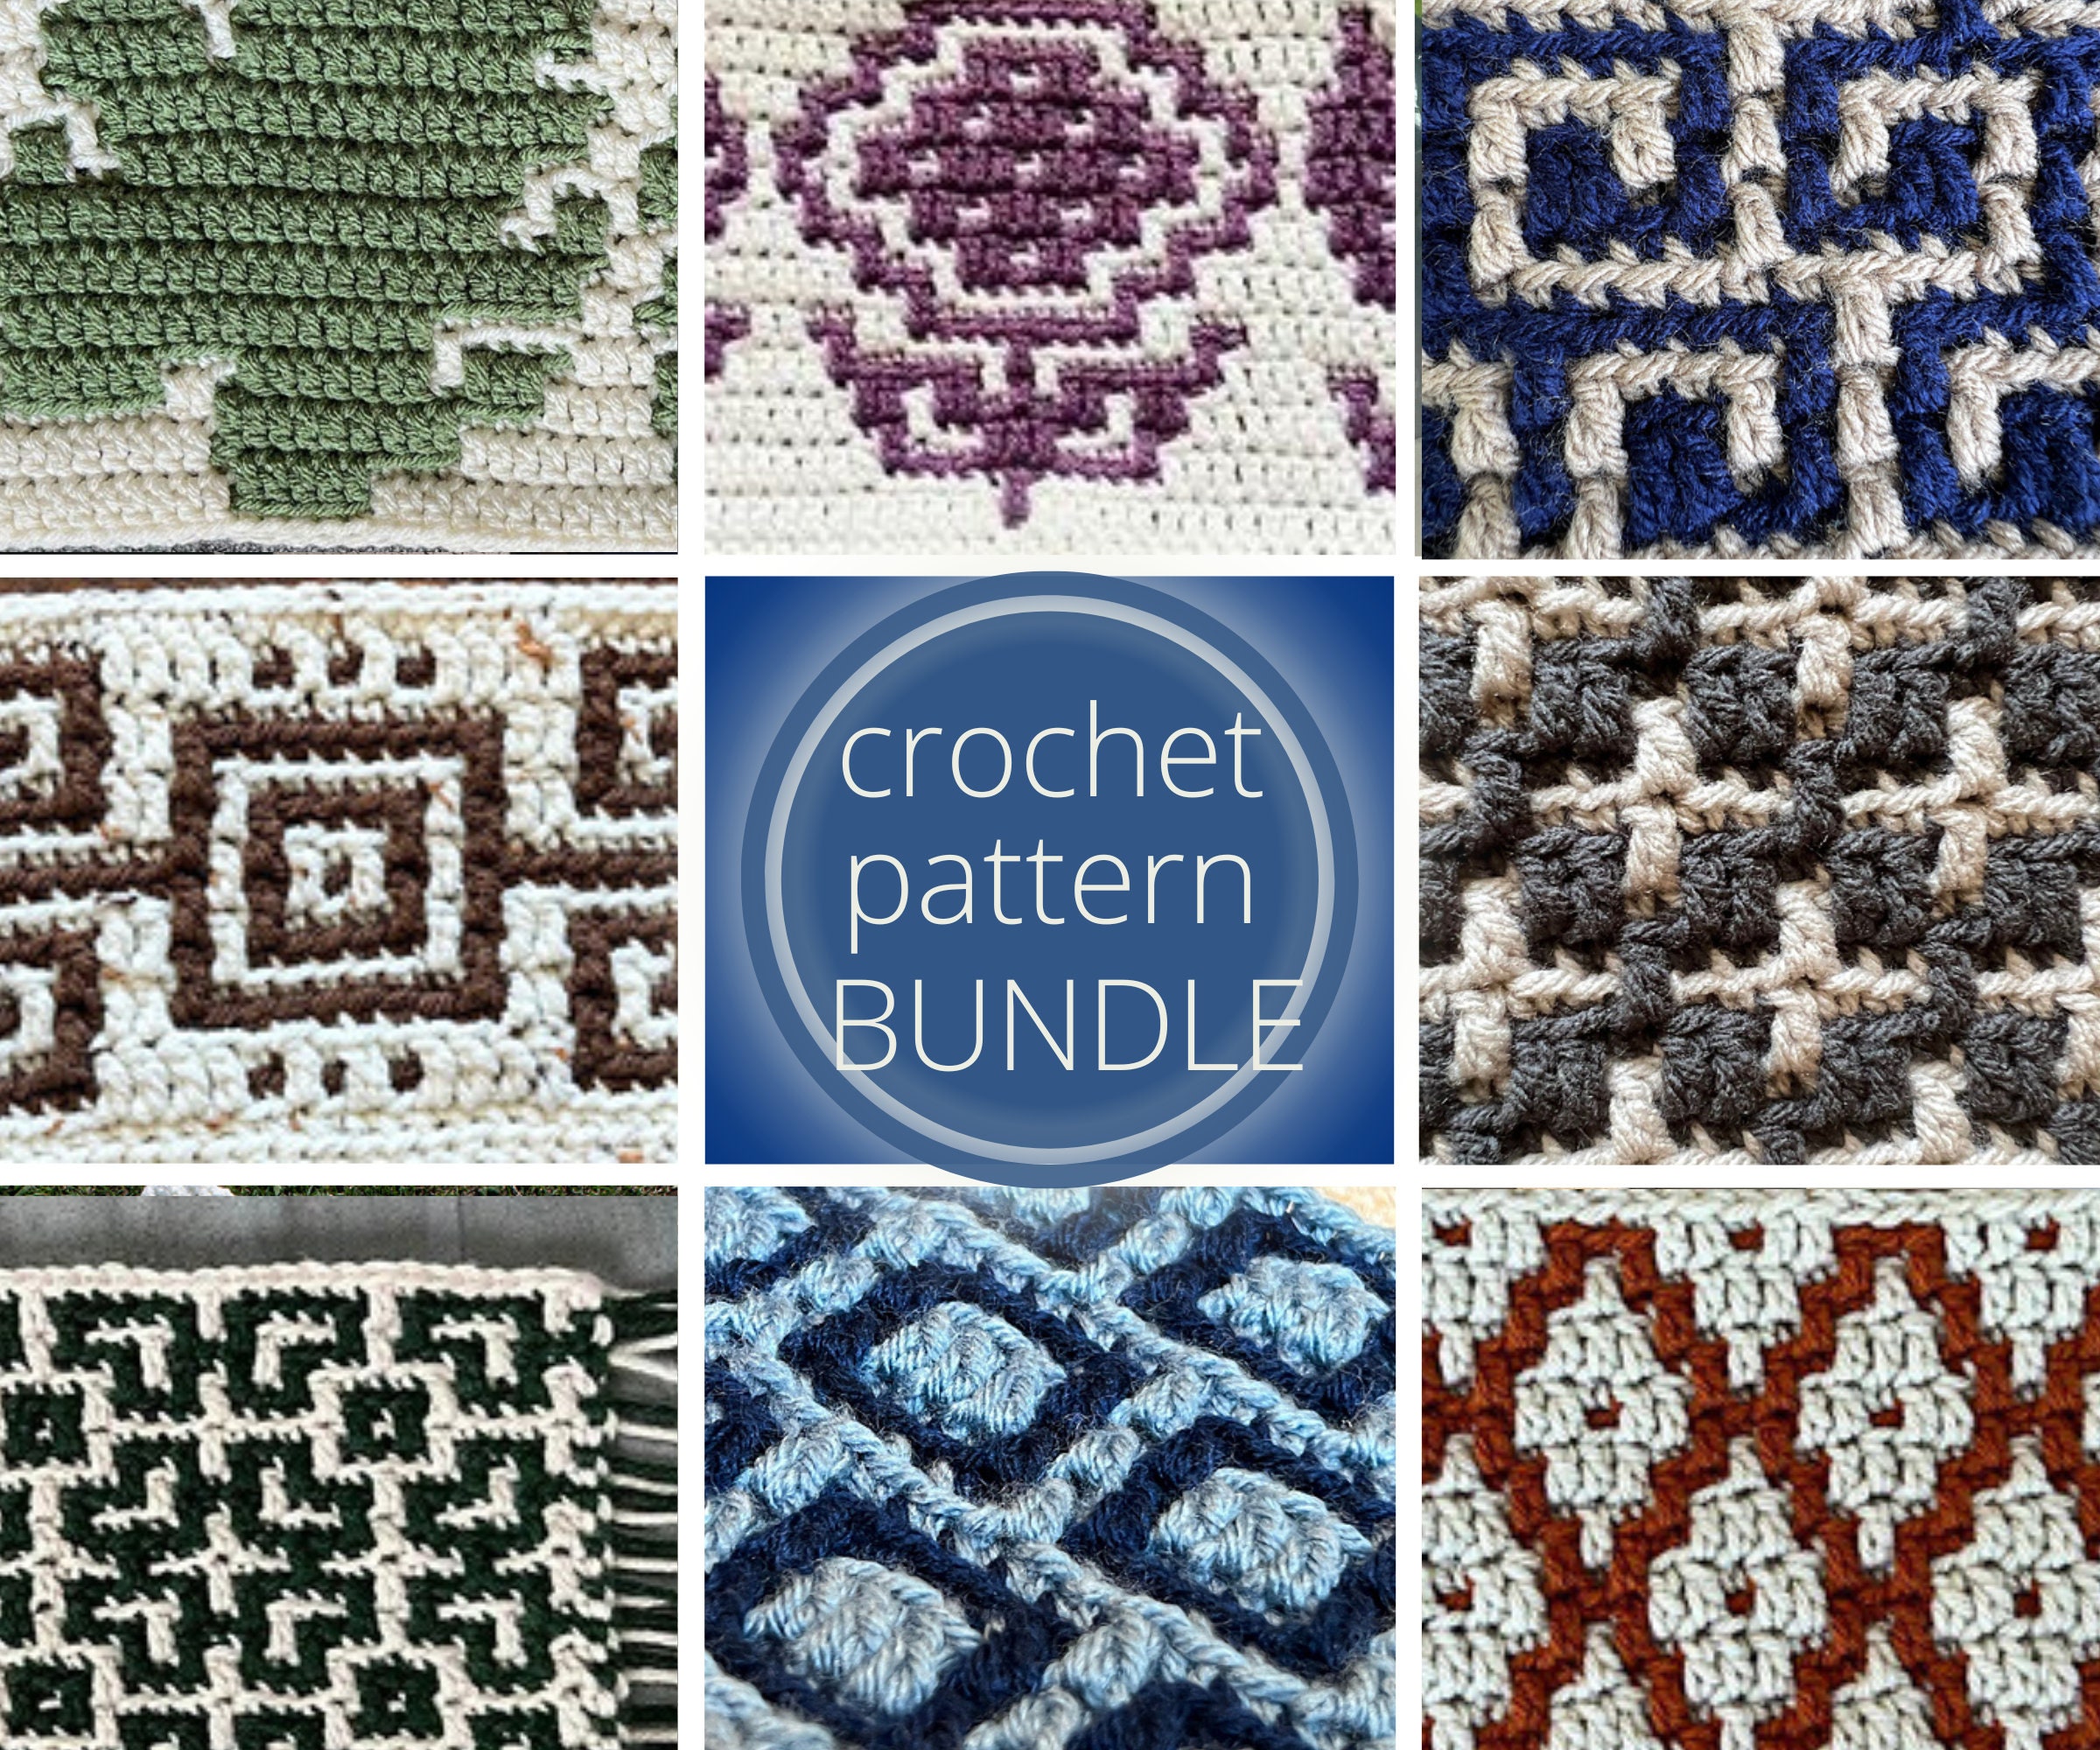 Easy crochet pattern for beginners / Crochet Patterns # 11 